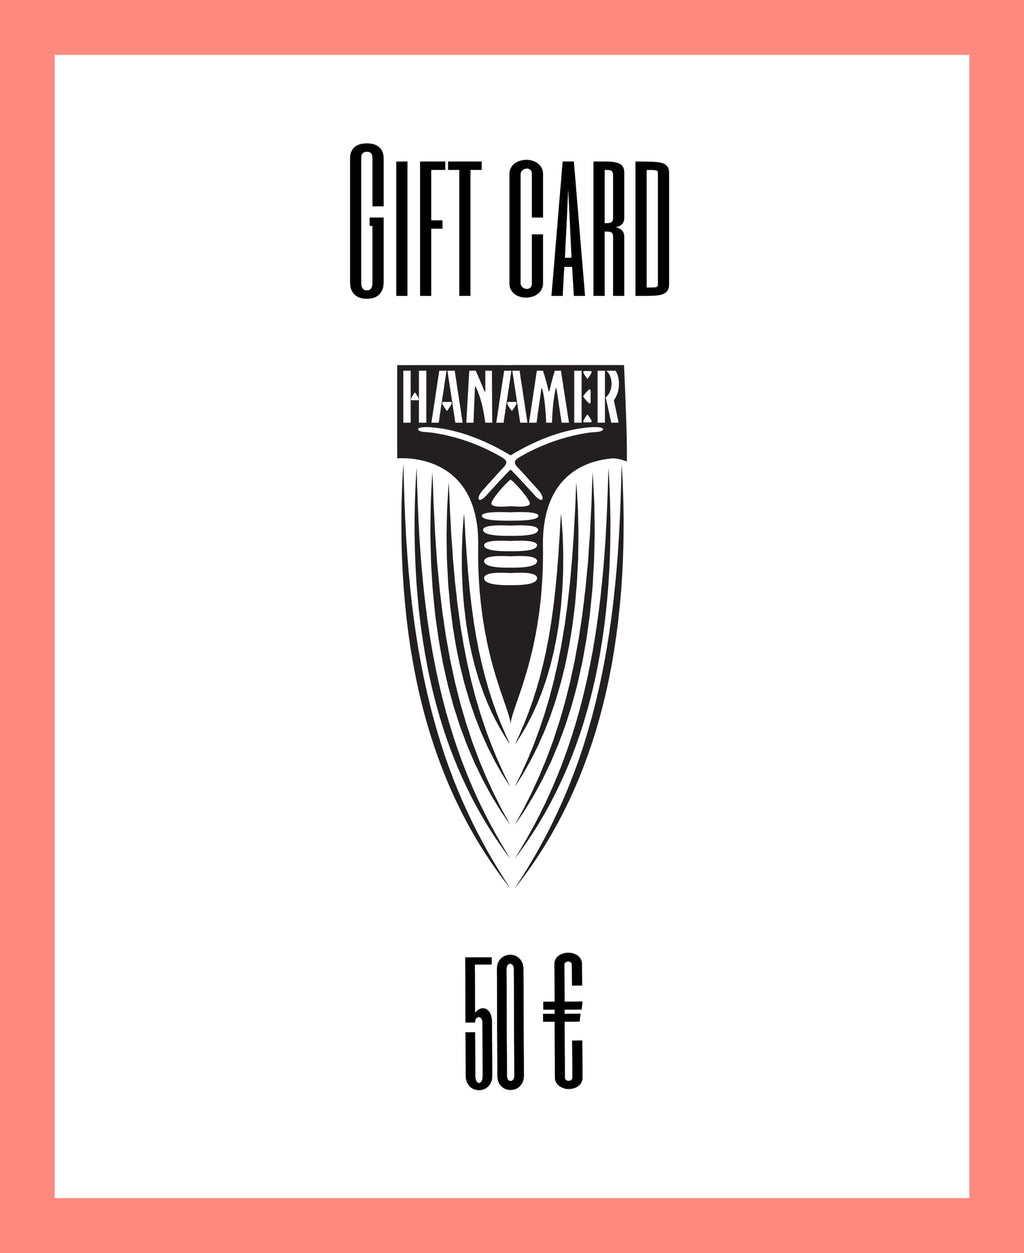 Gift Card 50 Euro Value